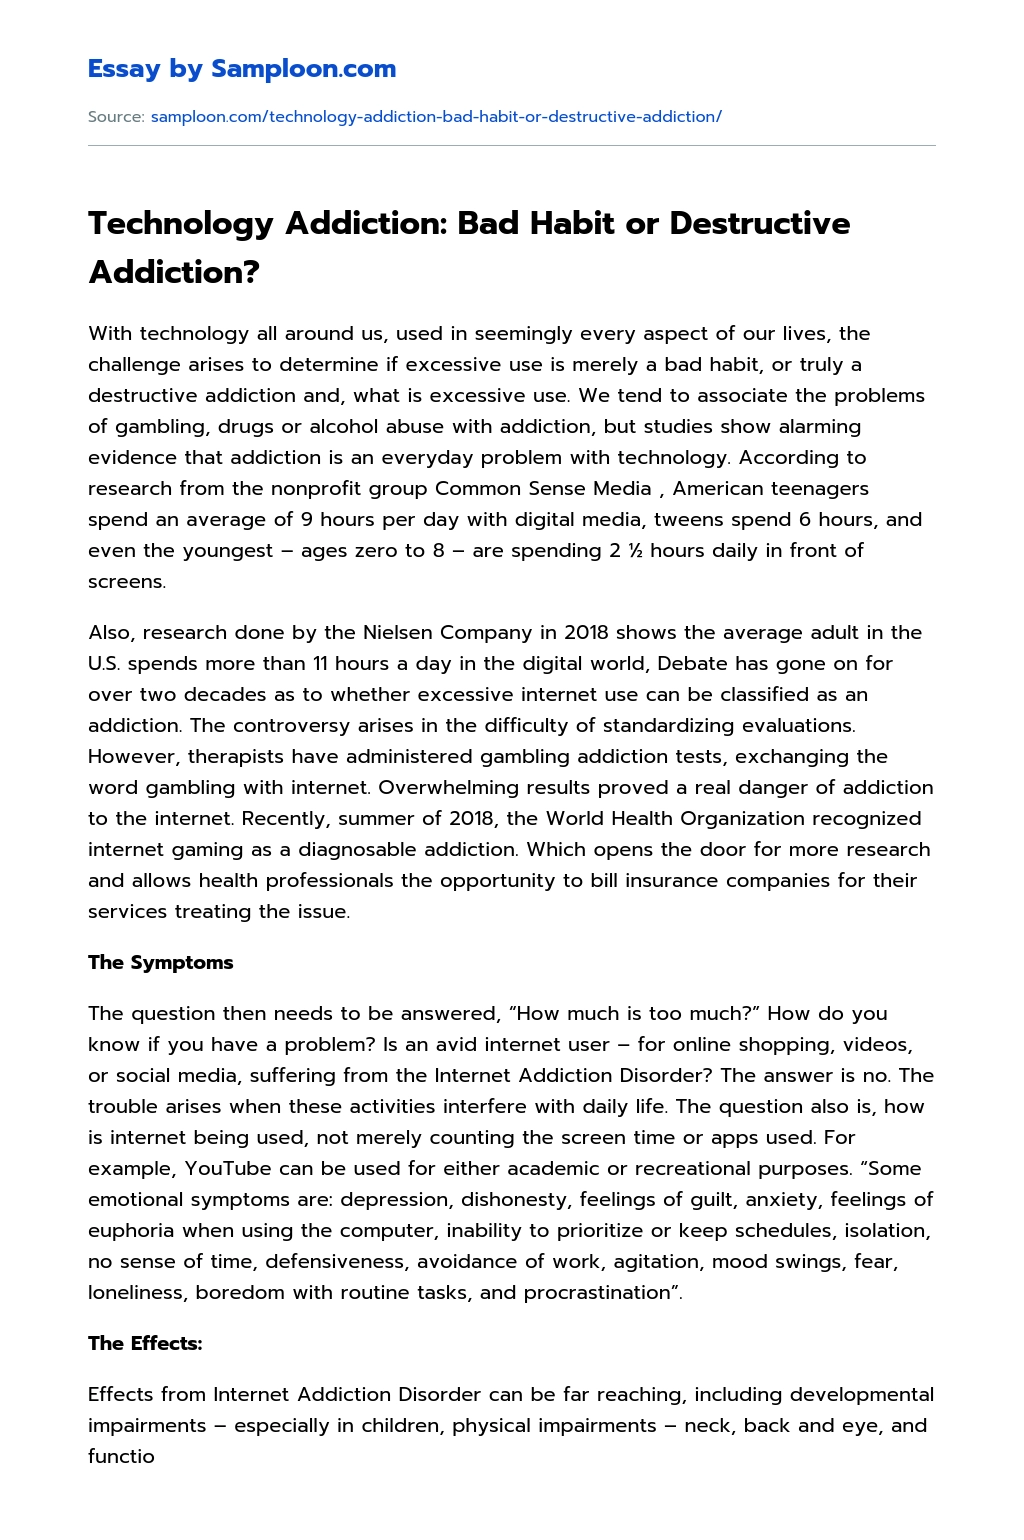 Technology Addiction: Bad Habit or Destructive Addiction? Persuasive Essay essay